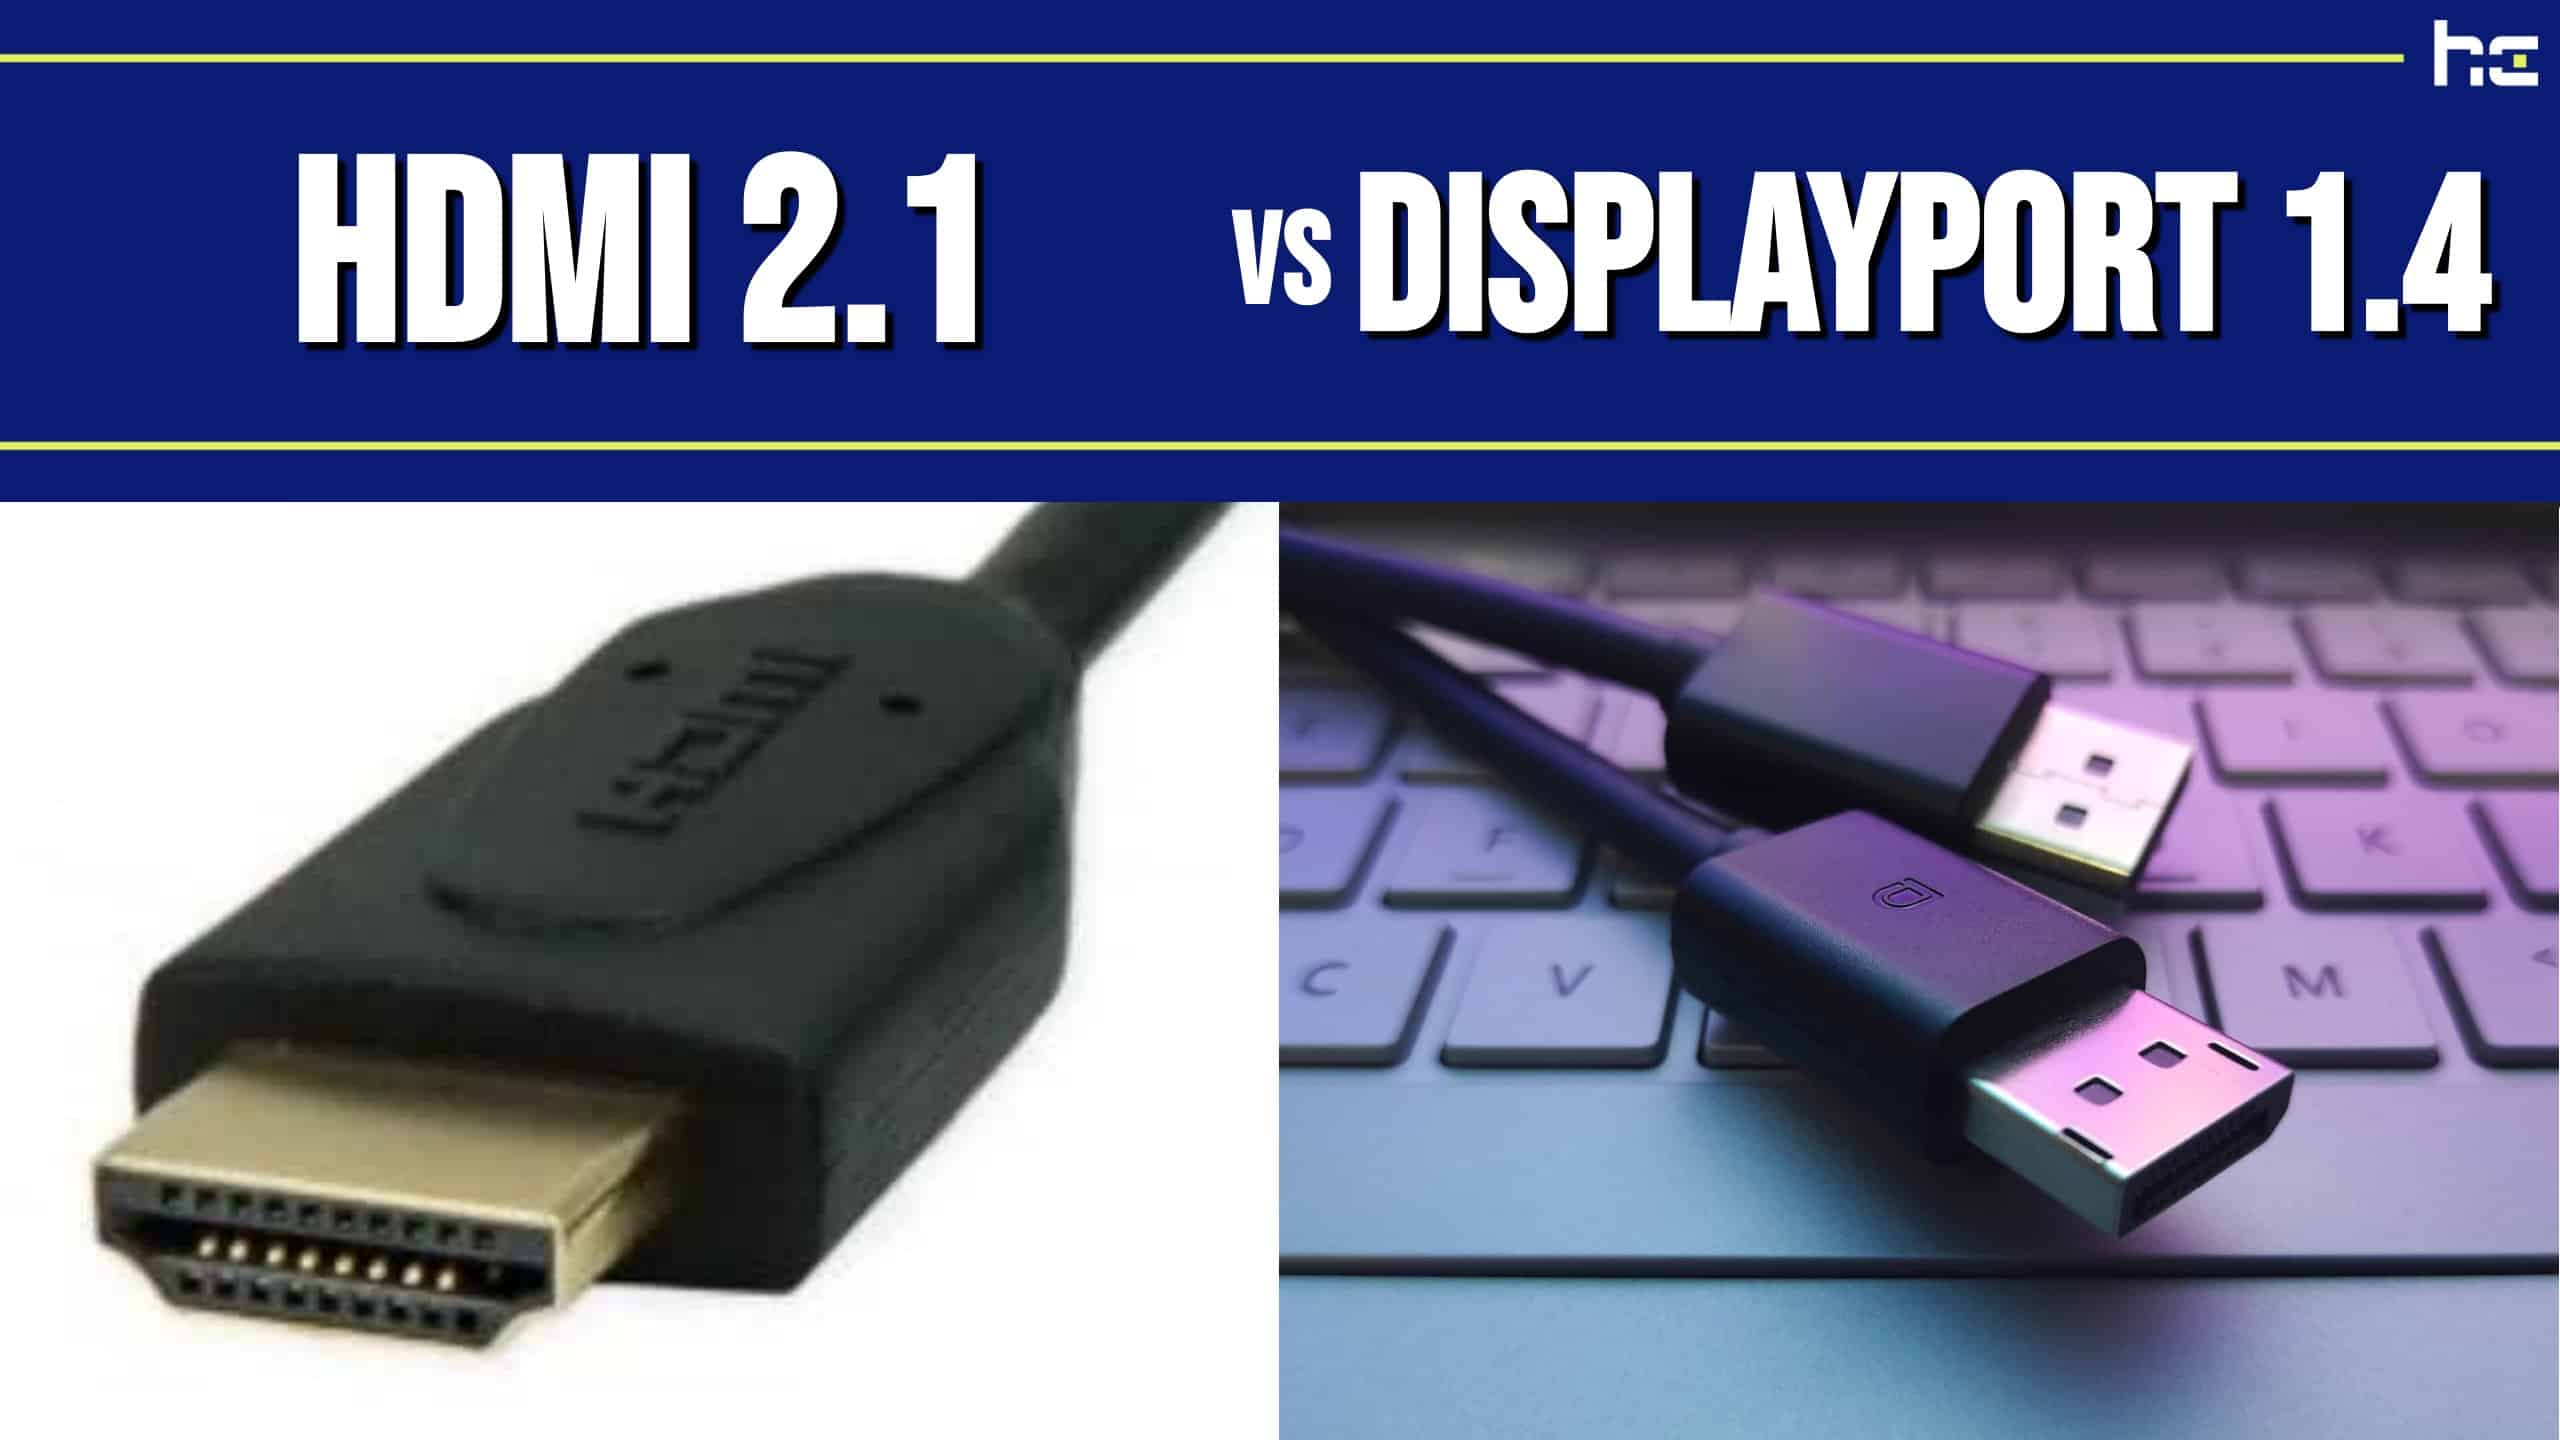 HMDI vs DisplayPort whats the difference? Silkland DisplayPort 2.1